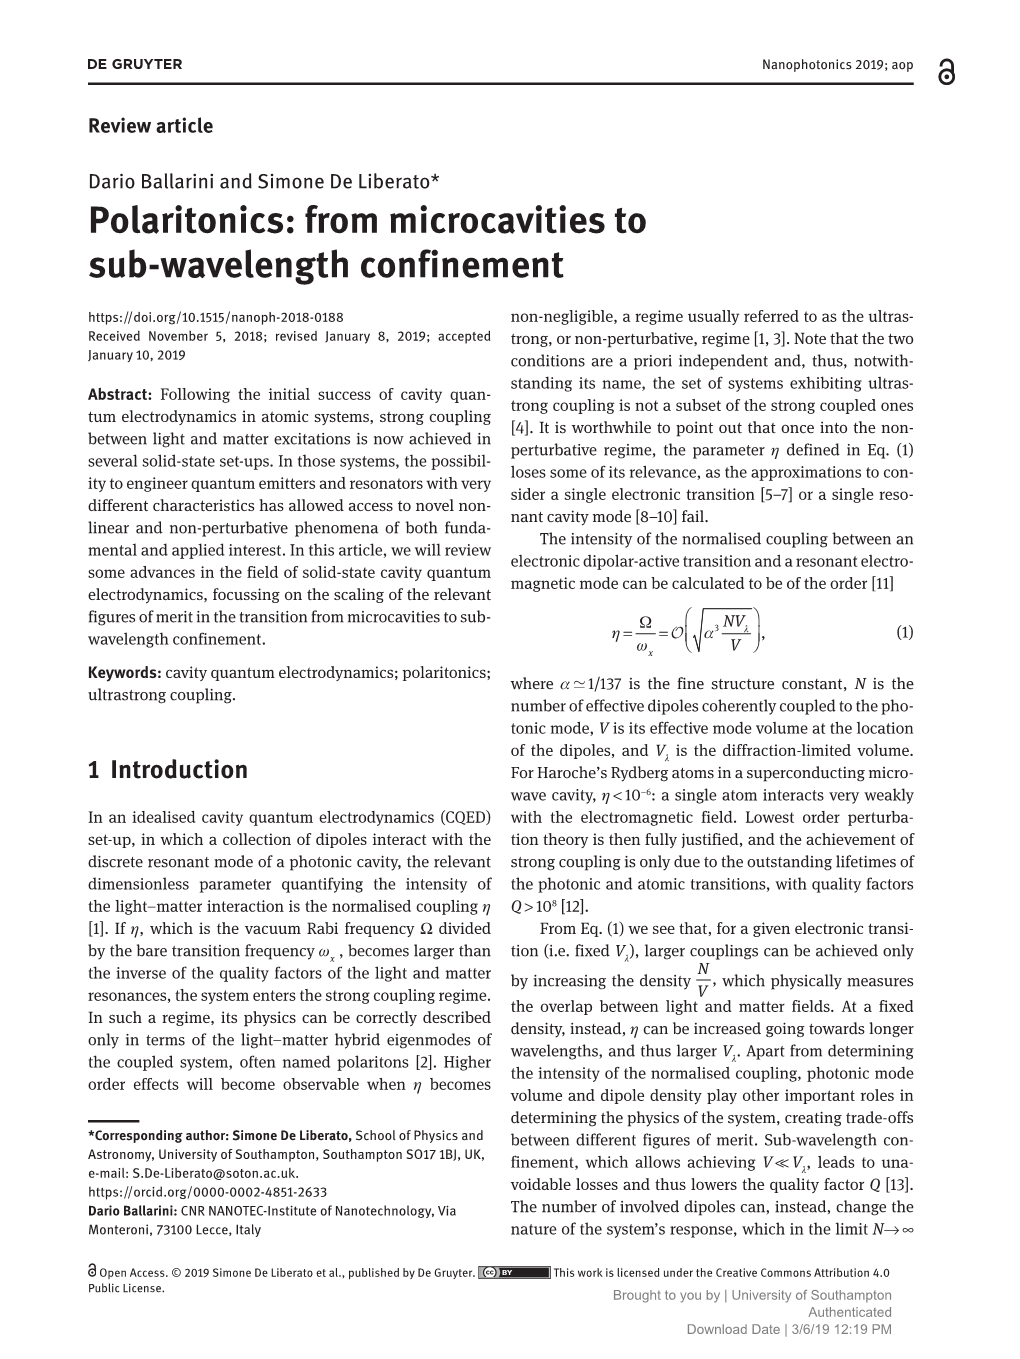 Polaritonics: from Microcavities to Sub-Wavelength Confinement